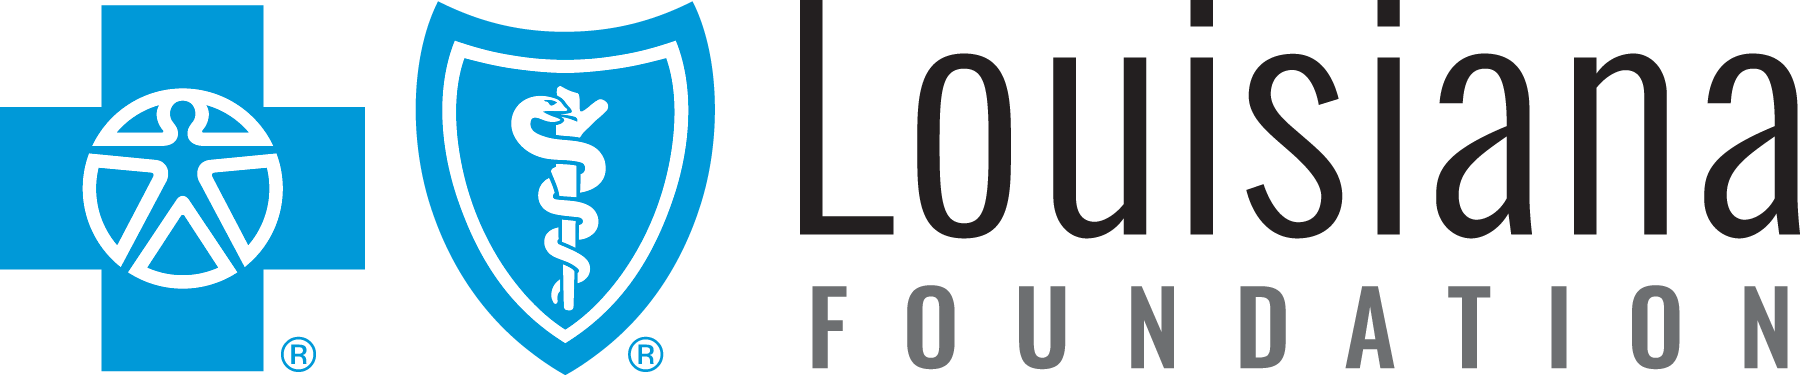 BC Foundation Logo transparency